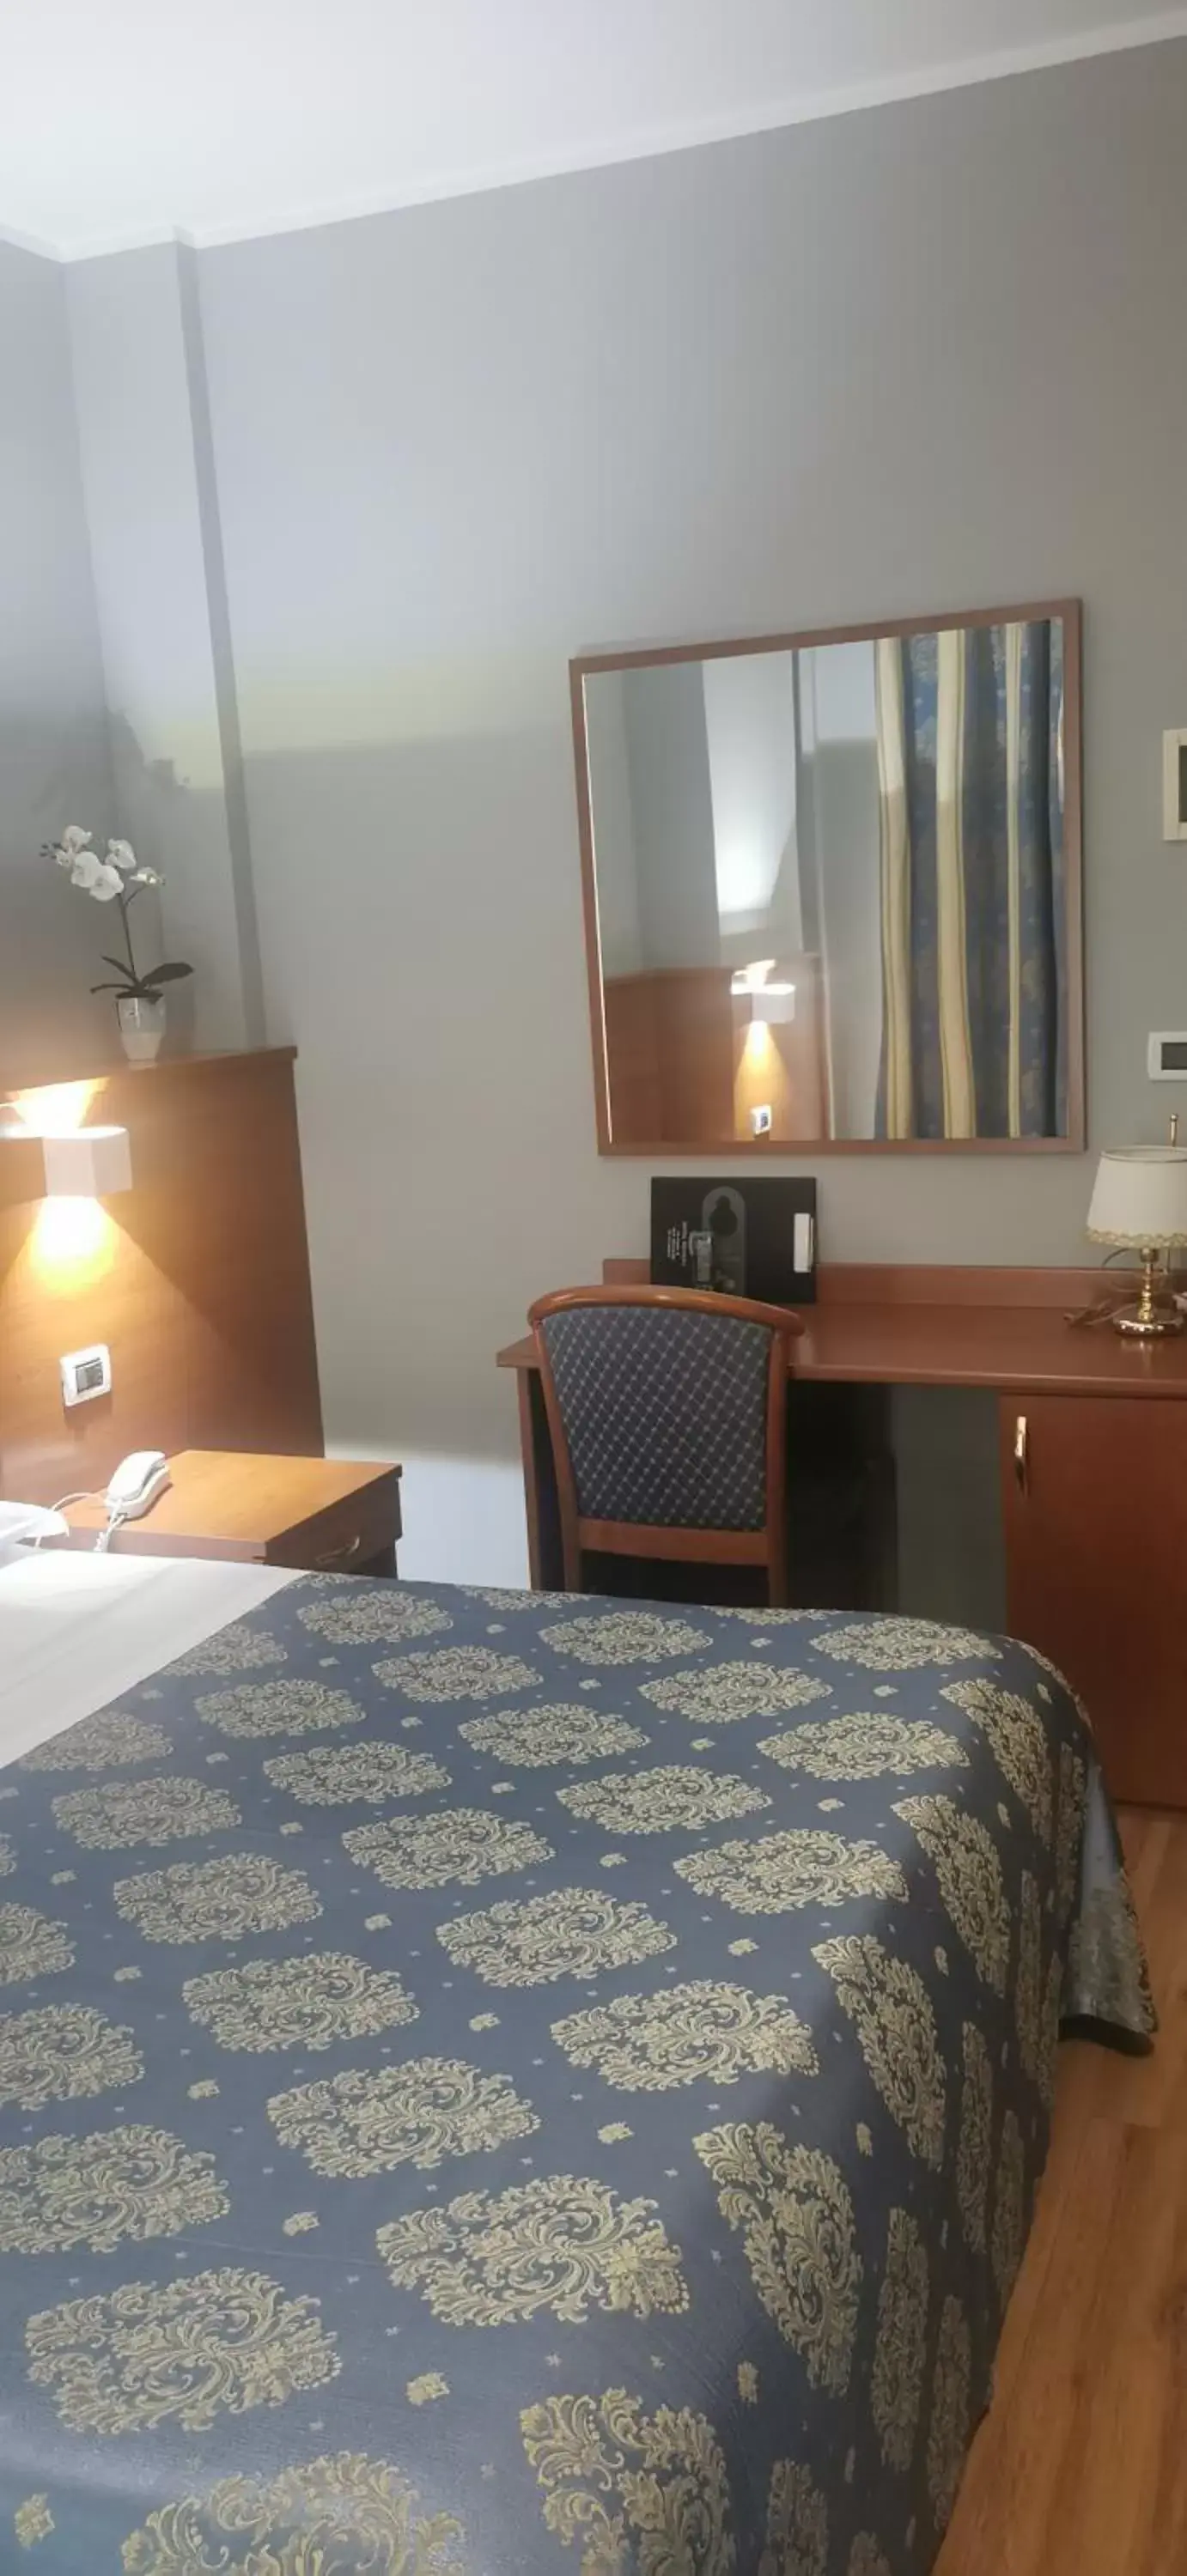 Bed in Hotel Rigolfo